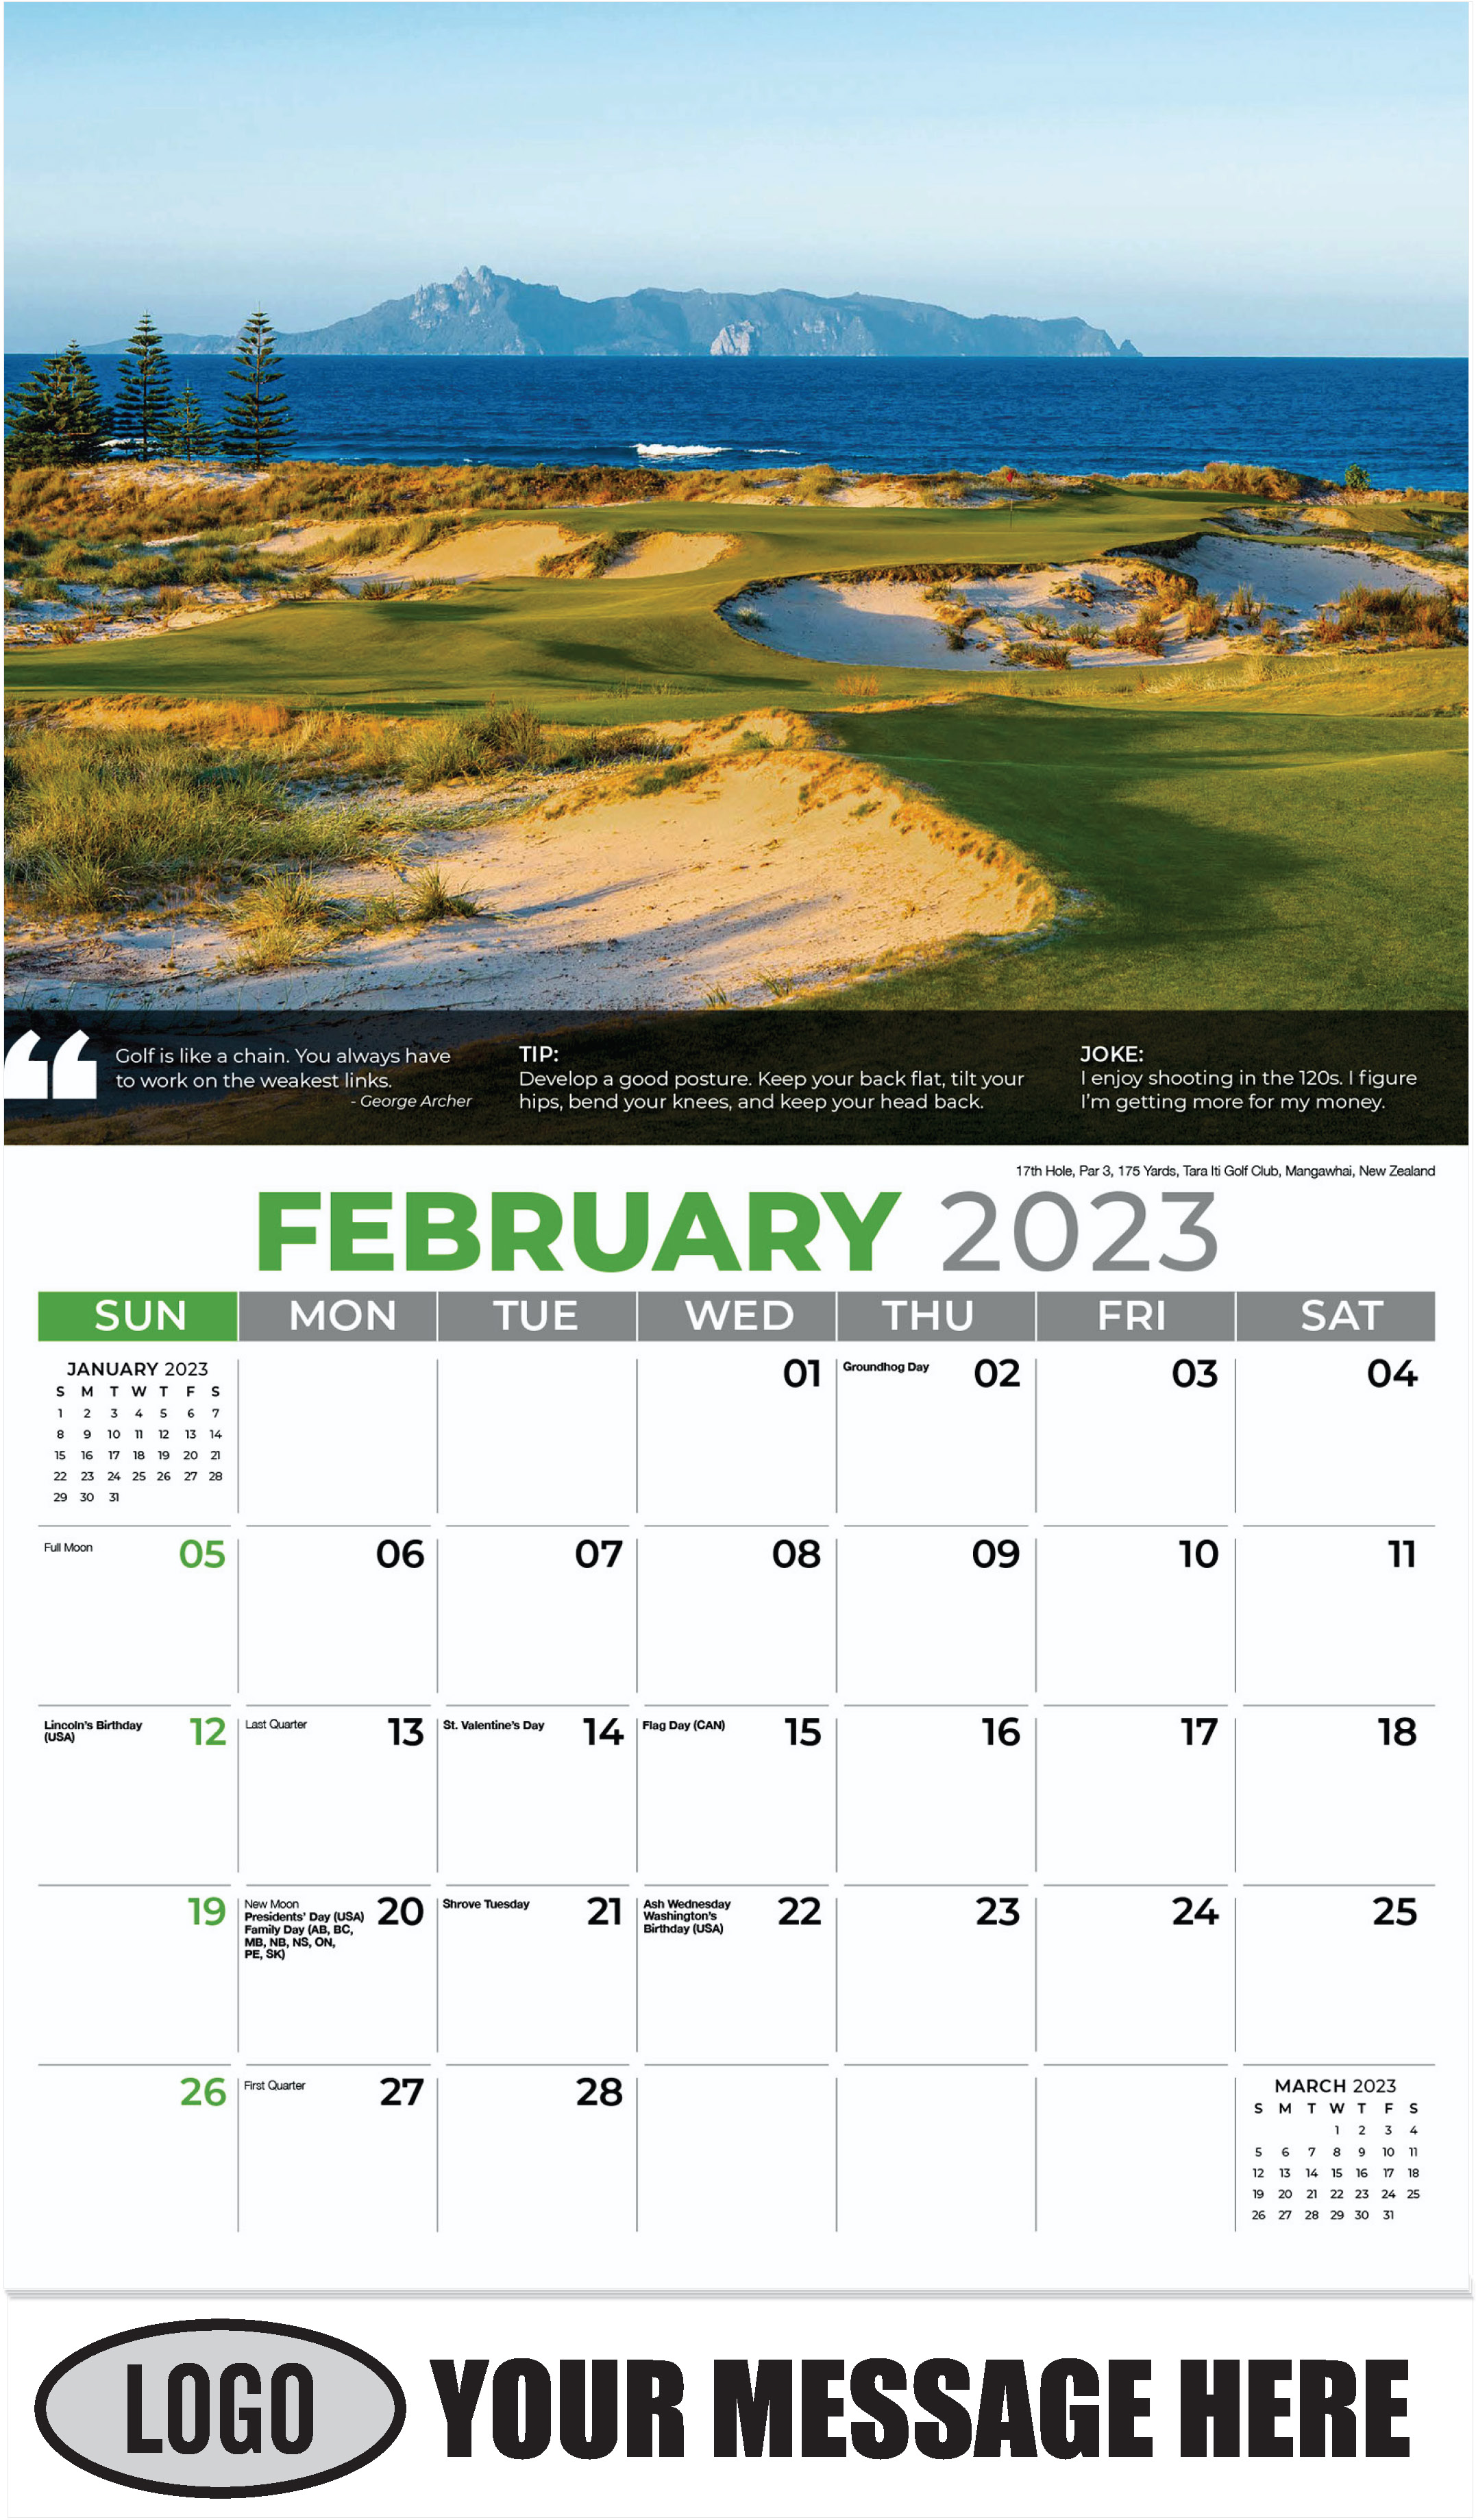 17th Hole, Par 3, 175 Yards, Tara Iti Golf Club, Mangawhai, New Zealand - February - Golf Tips  (Tips, Quips and Holes) 2023 Promotional Calendar